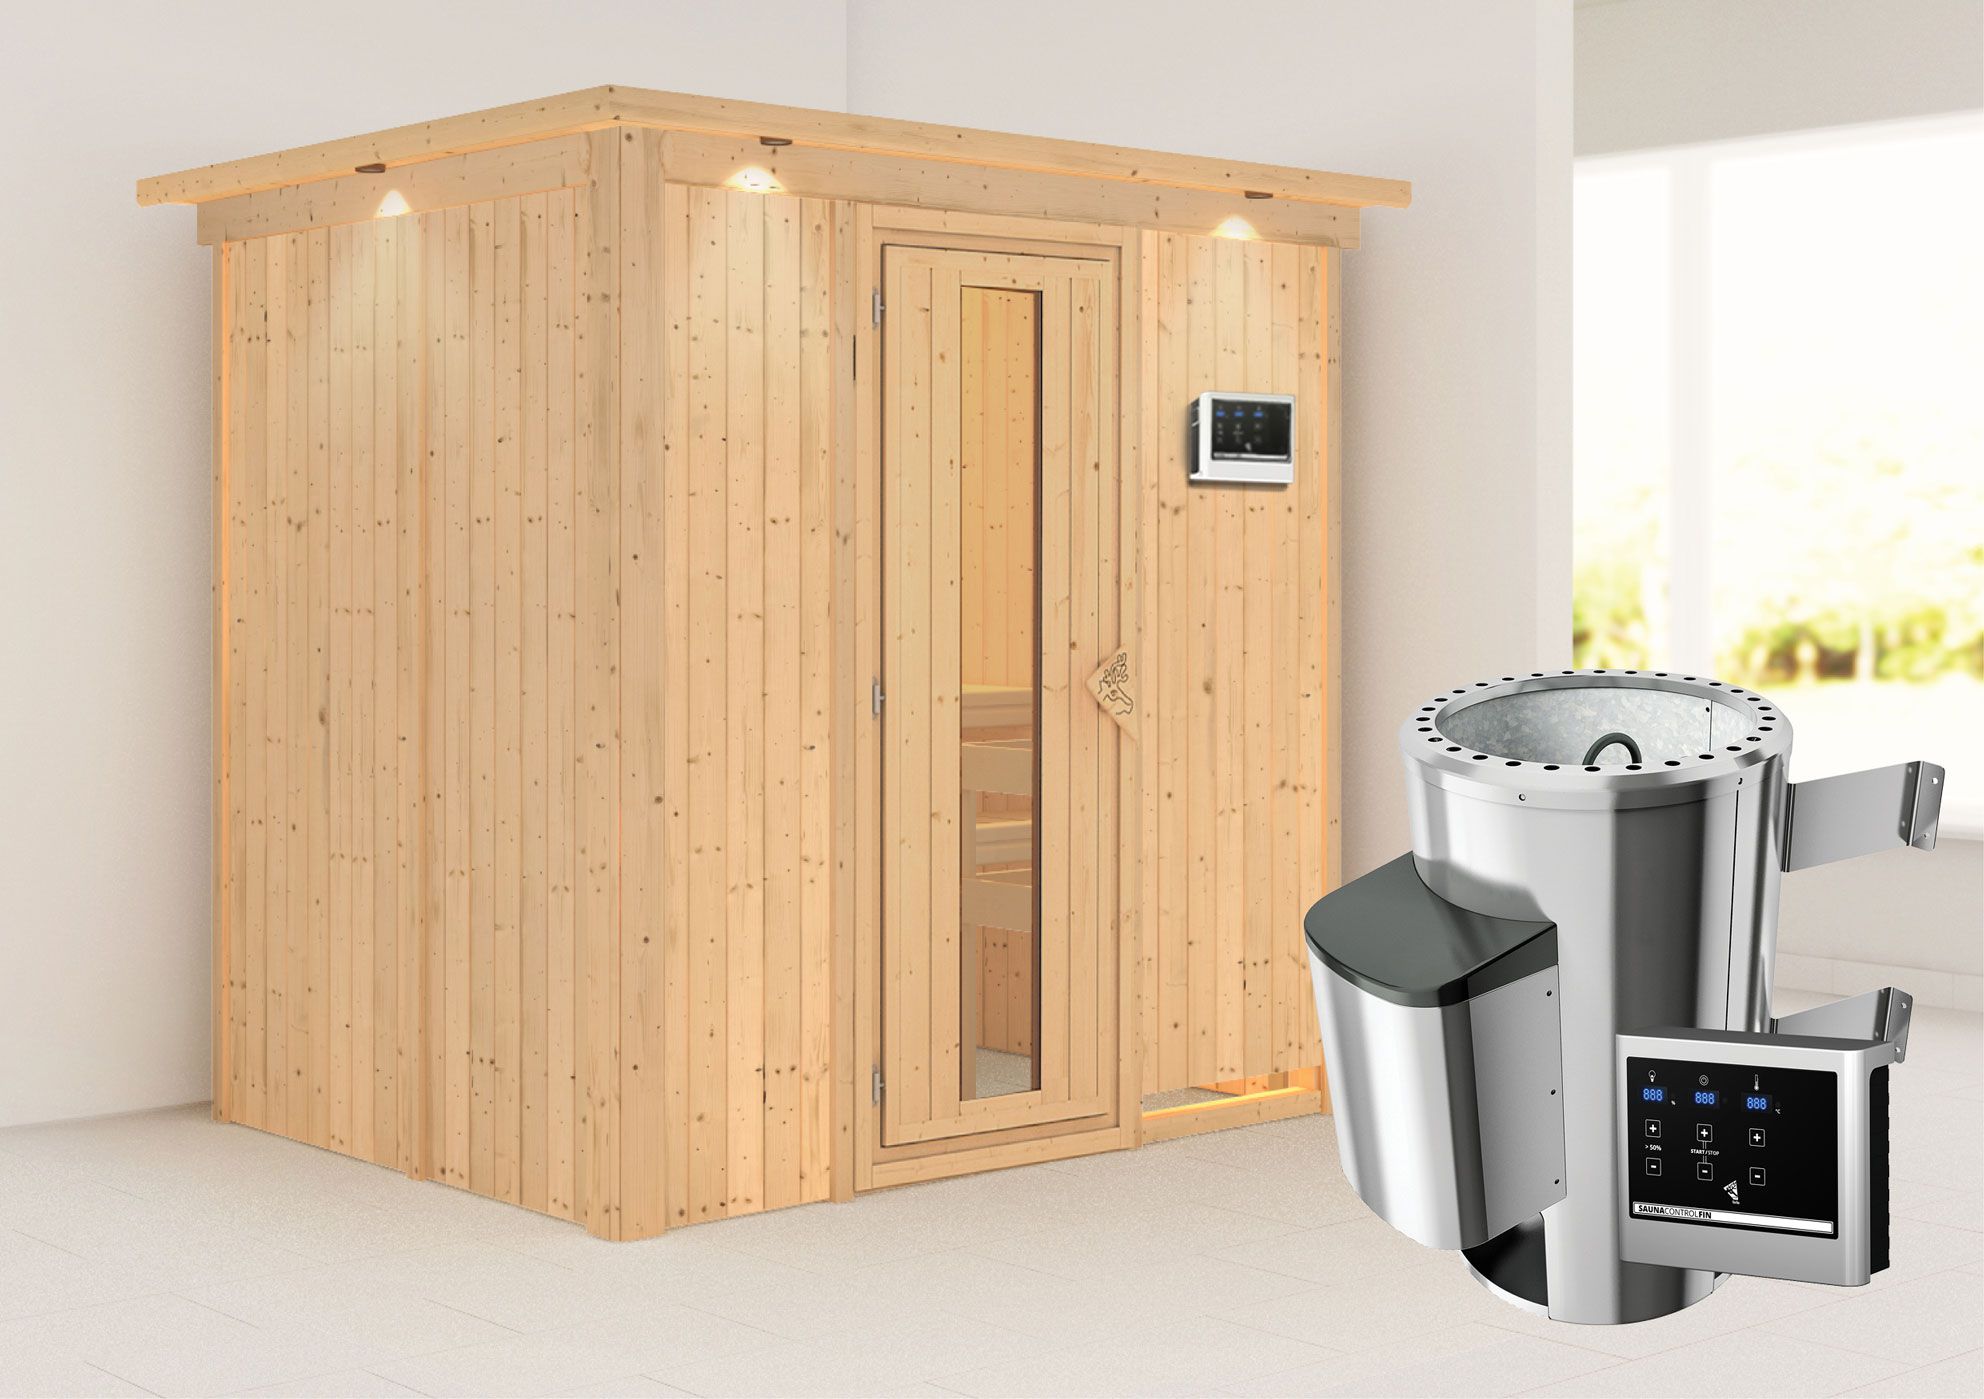 Sauna "Jarle" SET met energiebesparende deur en kroon - kleur: naturel, kachel externe regeling eenvoudig 3,6 kW - 210 x 165 x 202 cm (B x D x H)